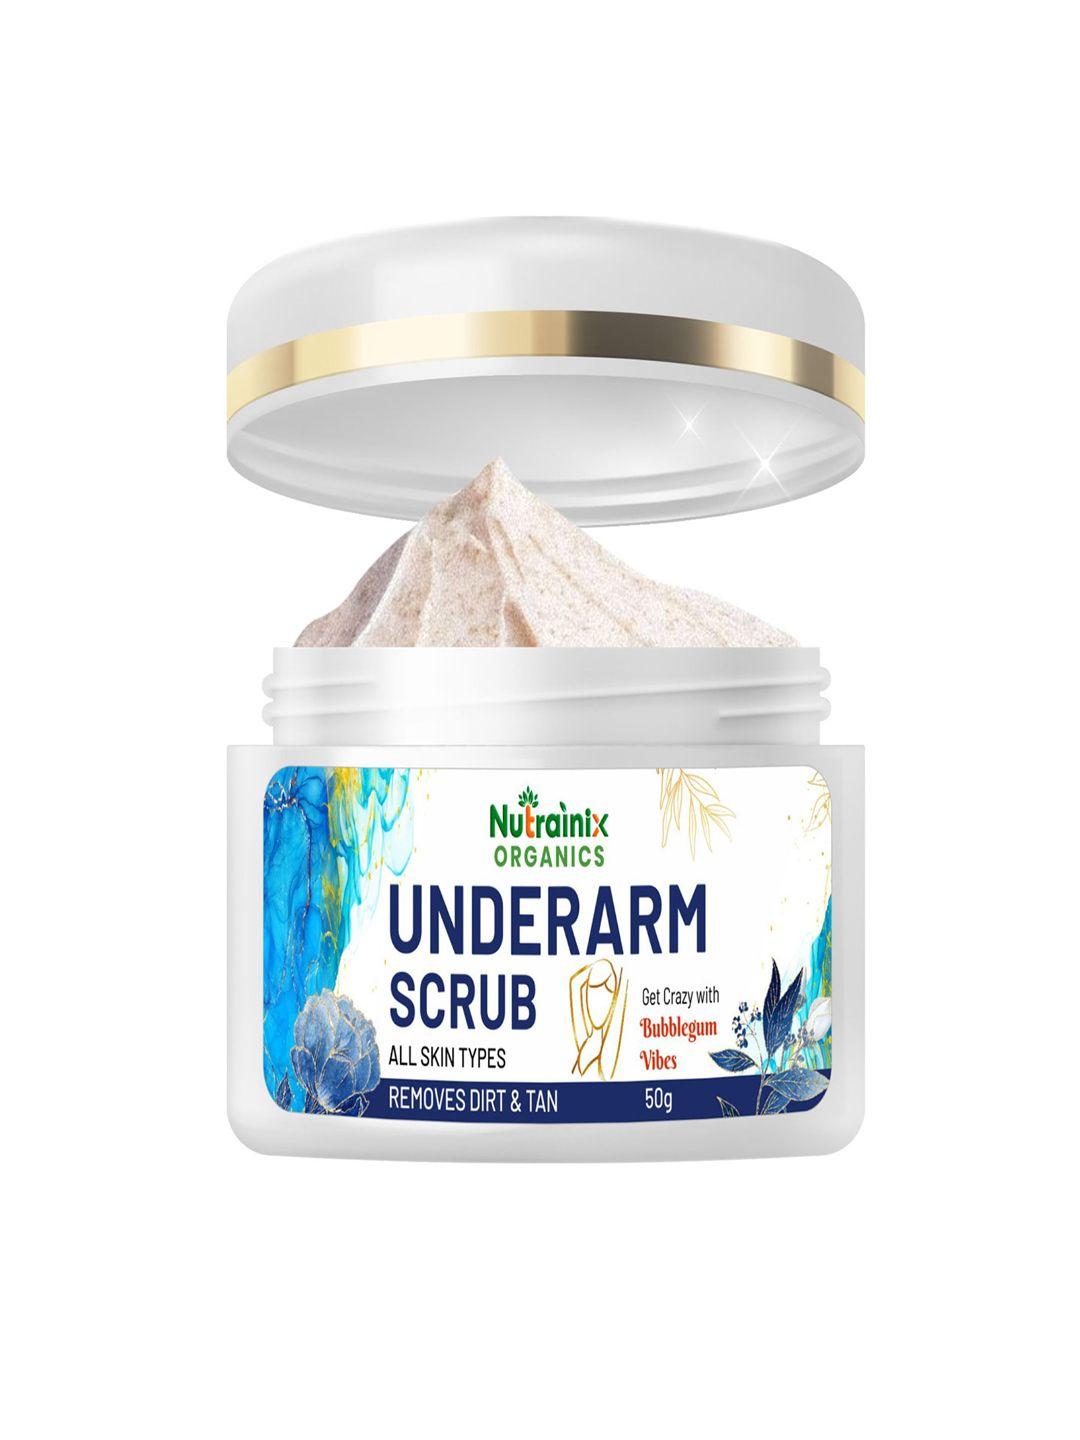 nutrainix organics peach underarm scrub, keep your underarms clean and remove tanning - 50g